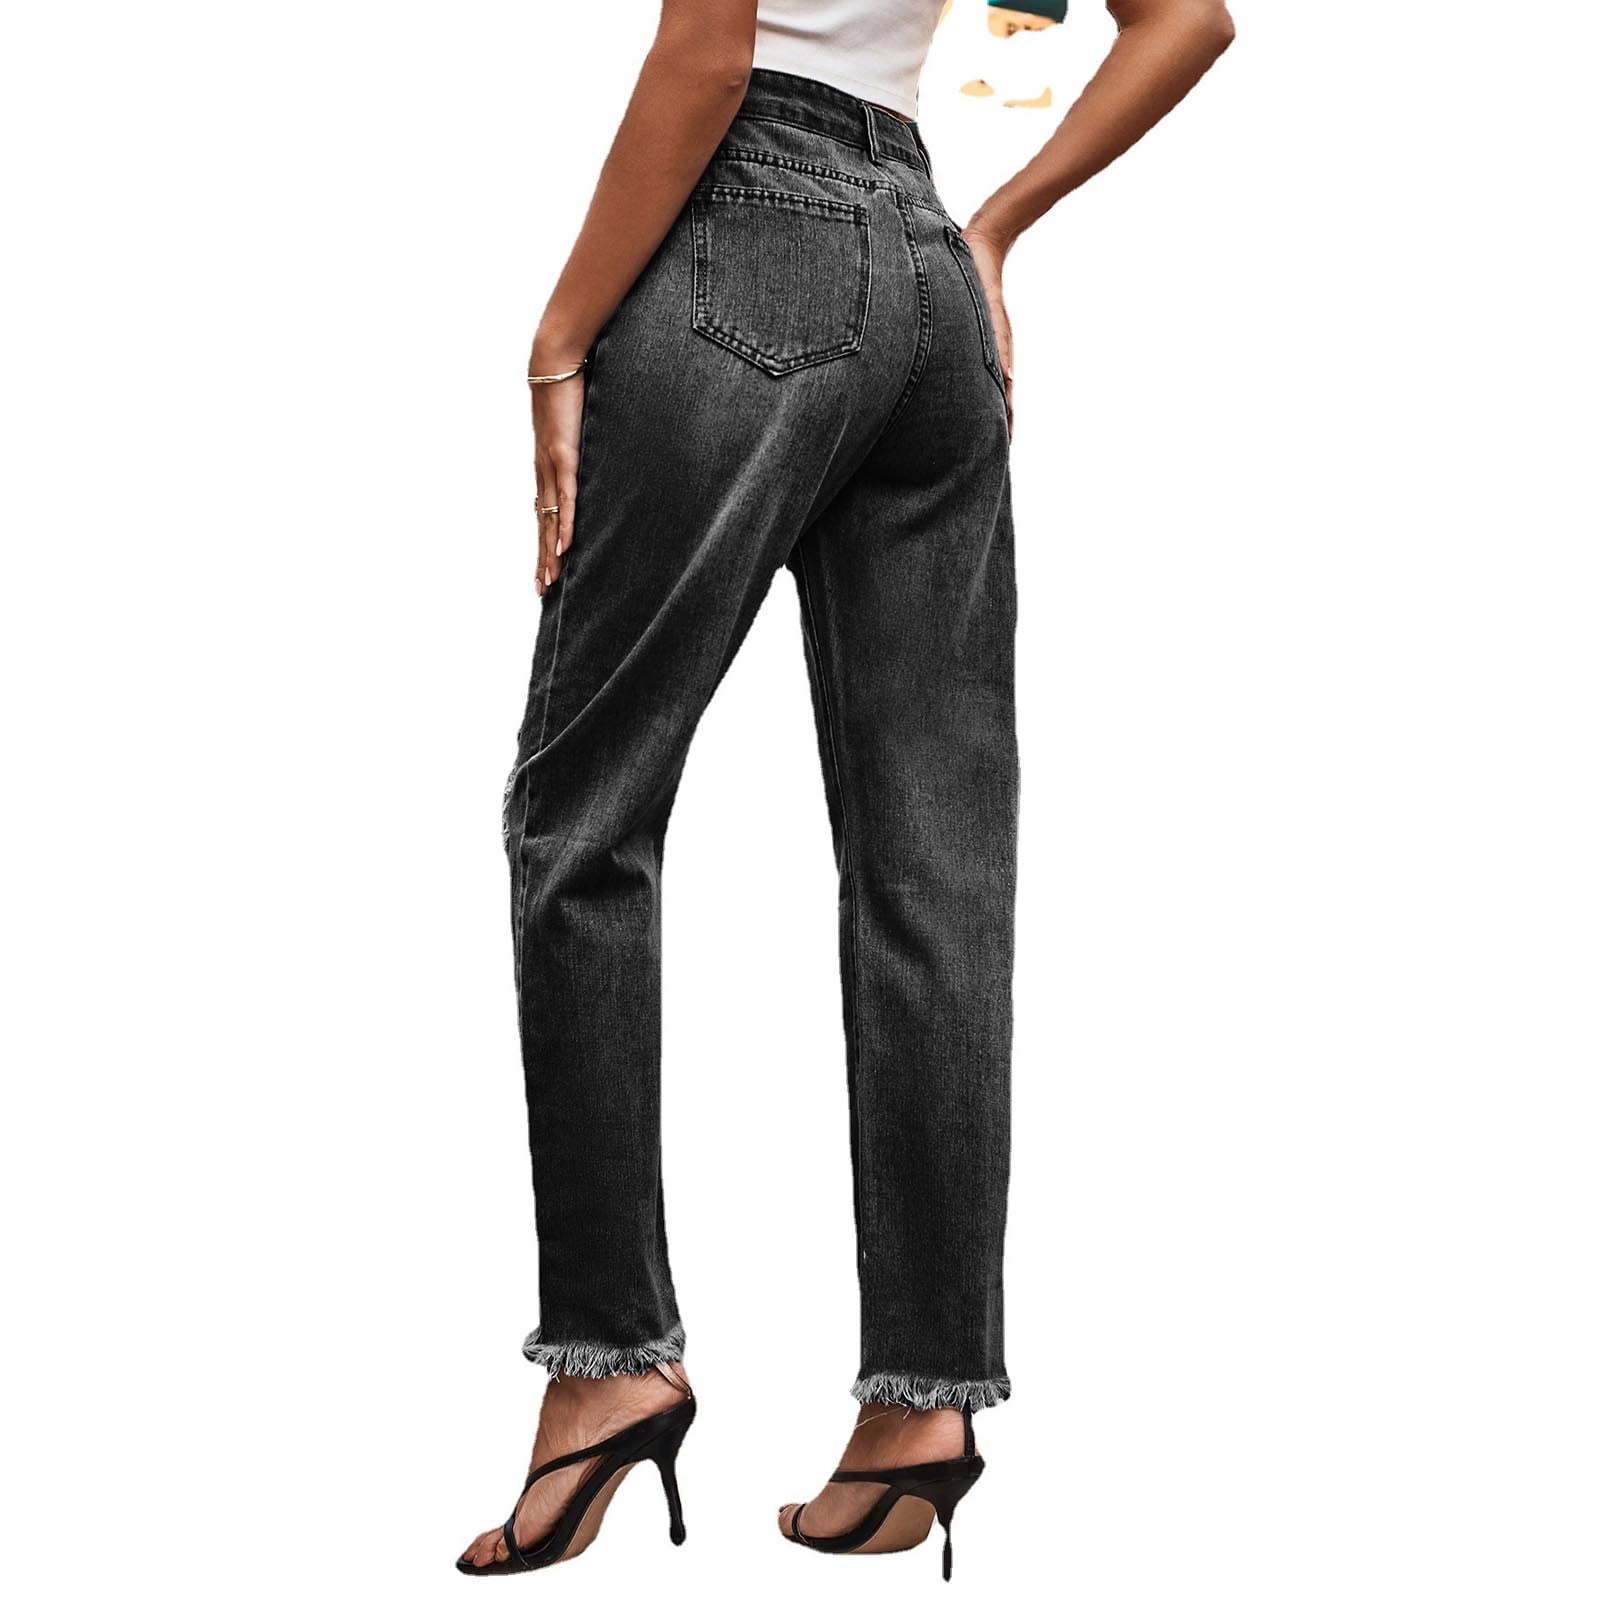 Gaecuw Jeans for Women Regular Fit Long Pants Button Up Zipper